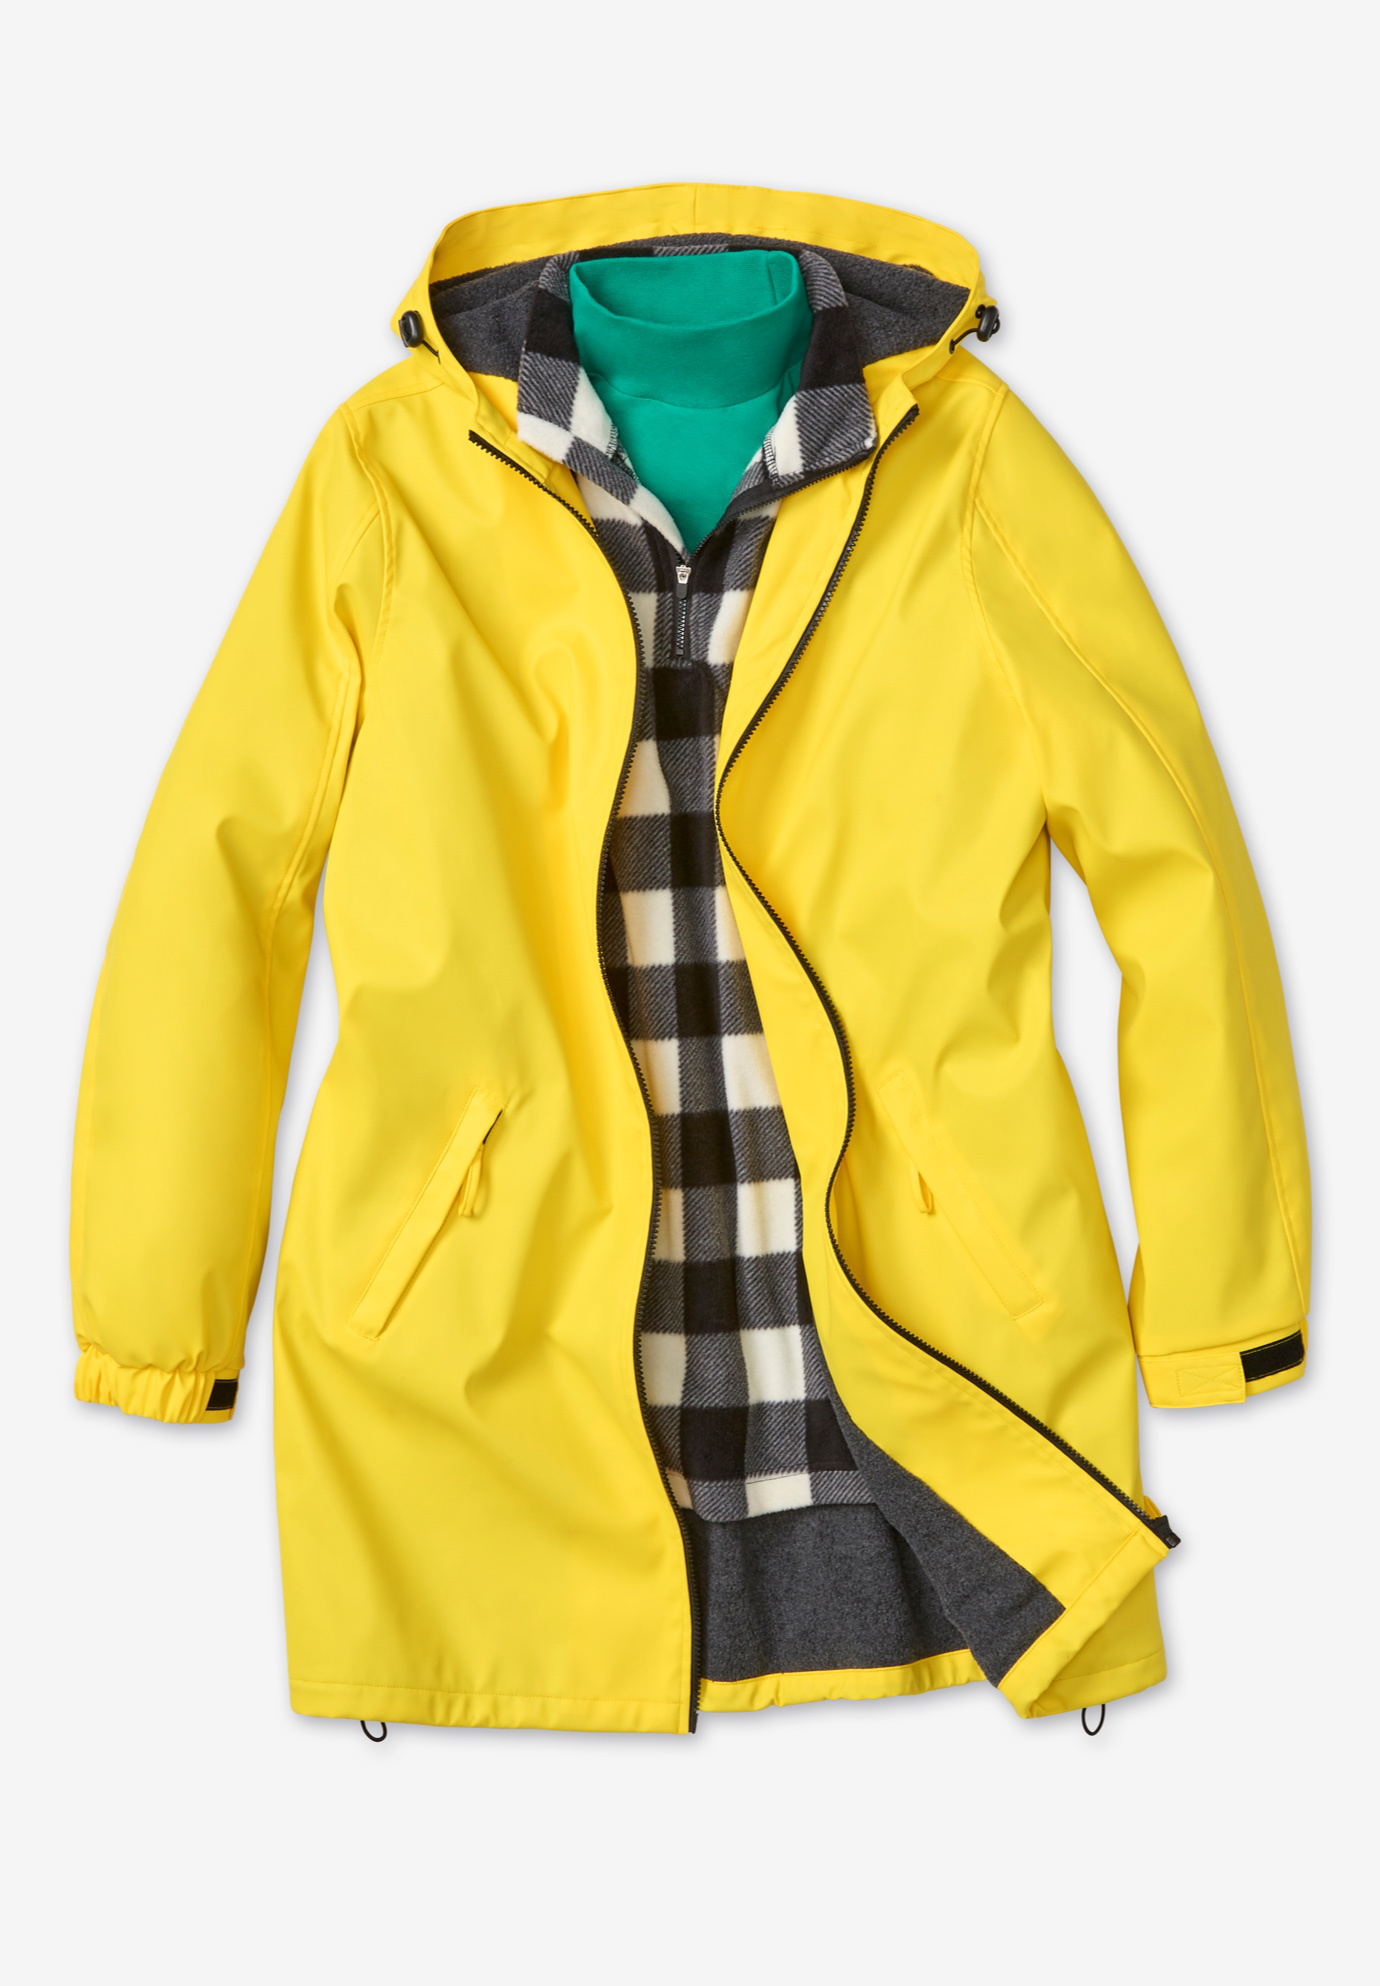 Woman Within Women's Plus Size Hooded Slicker Raincoat Raincoat - image 5 of 6